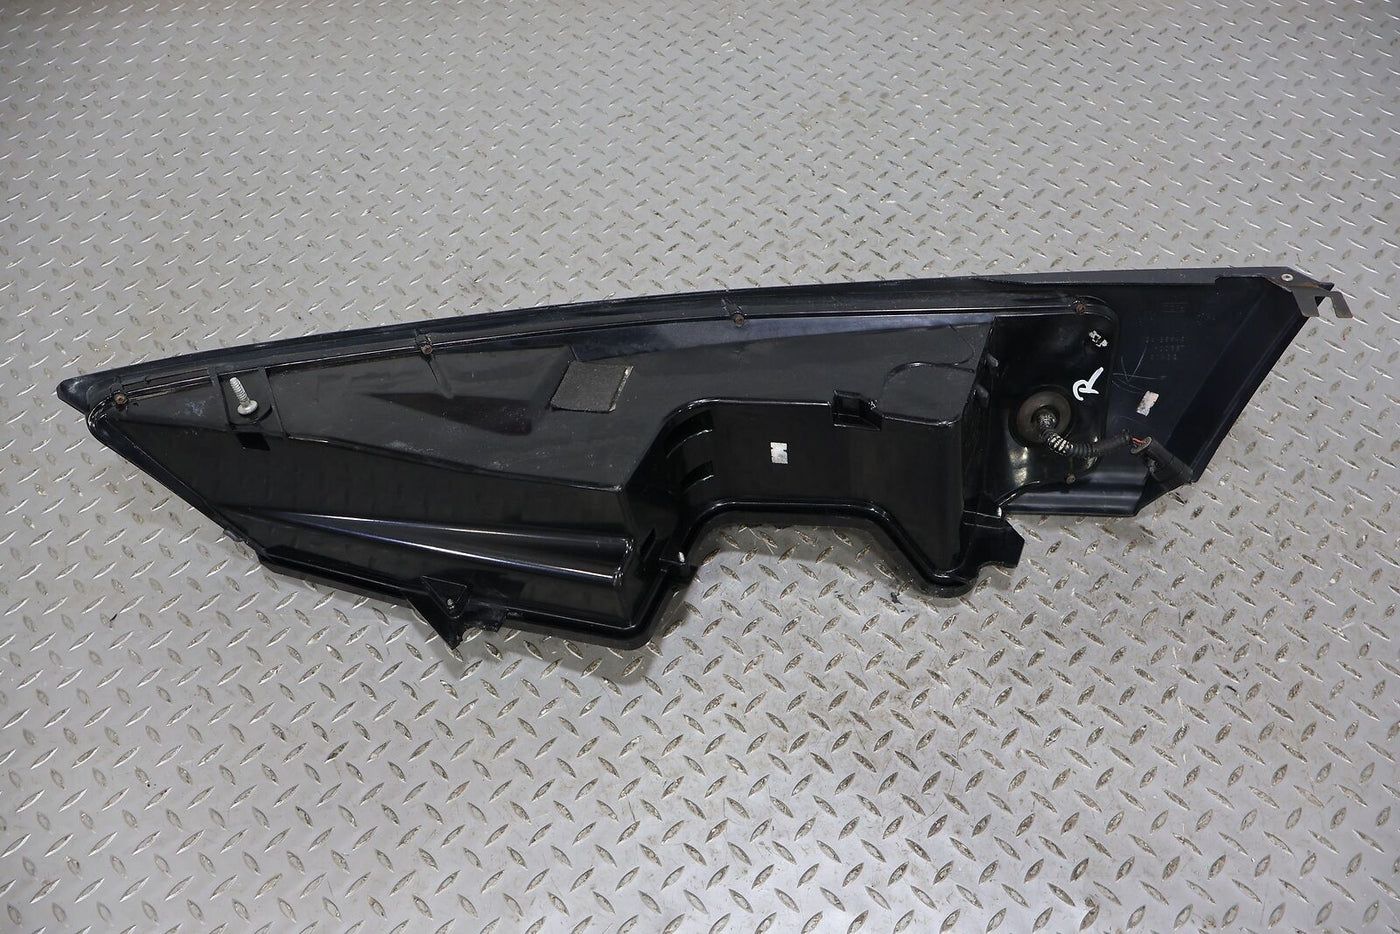 99-02 Plymouth Prowler Left LH Headlight W/Bezel (Muholland Blue) Broken Tabs